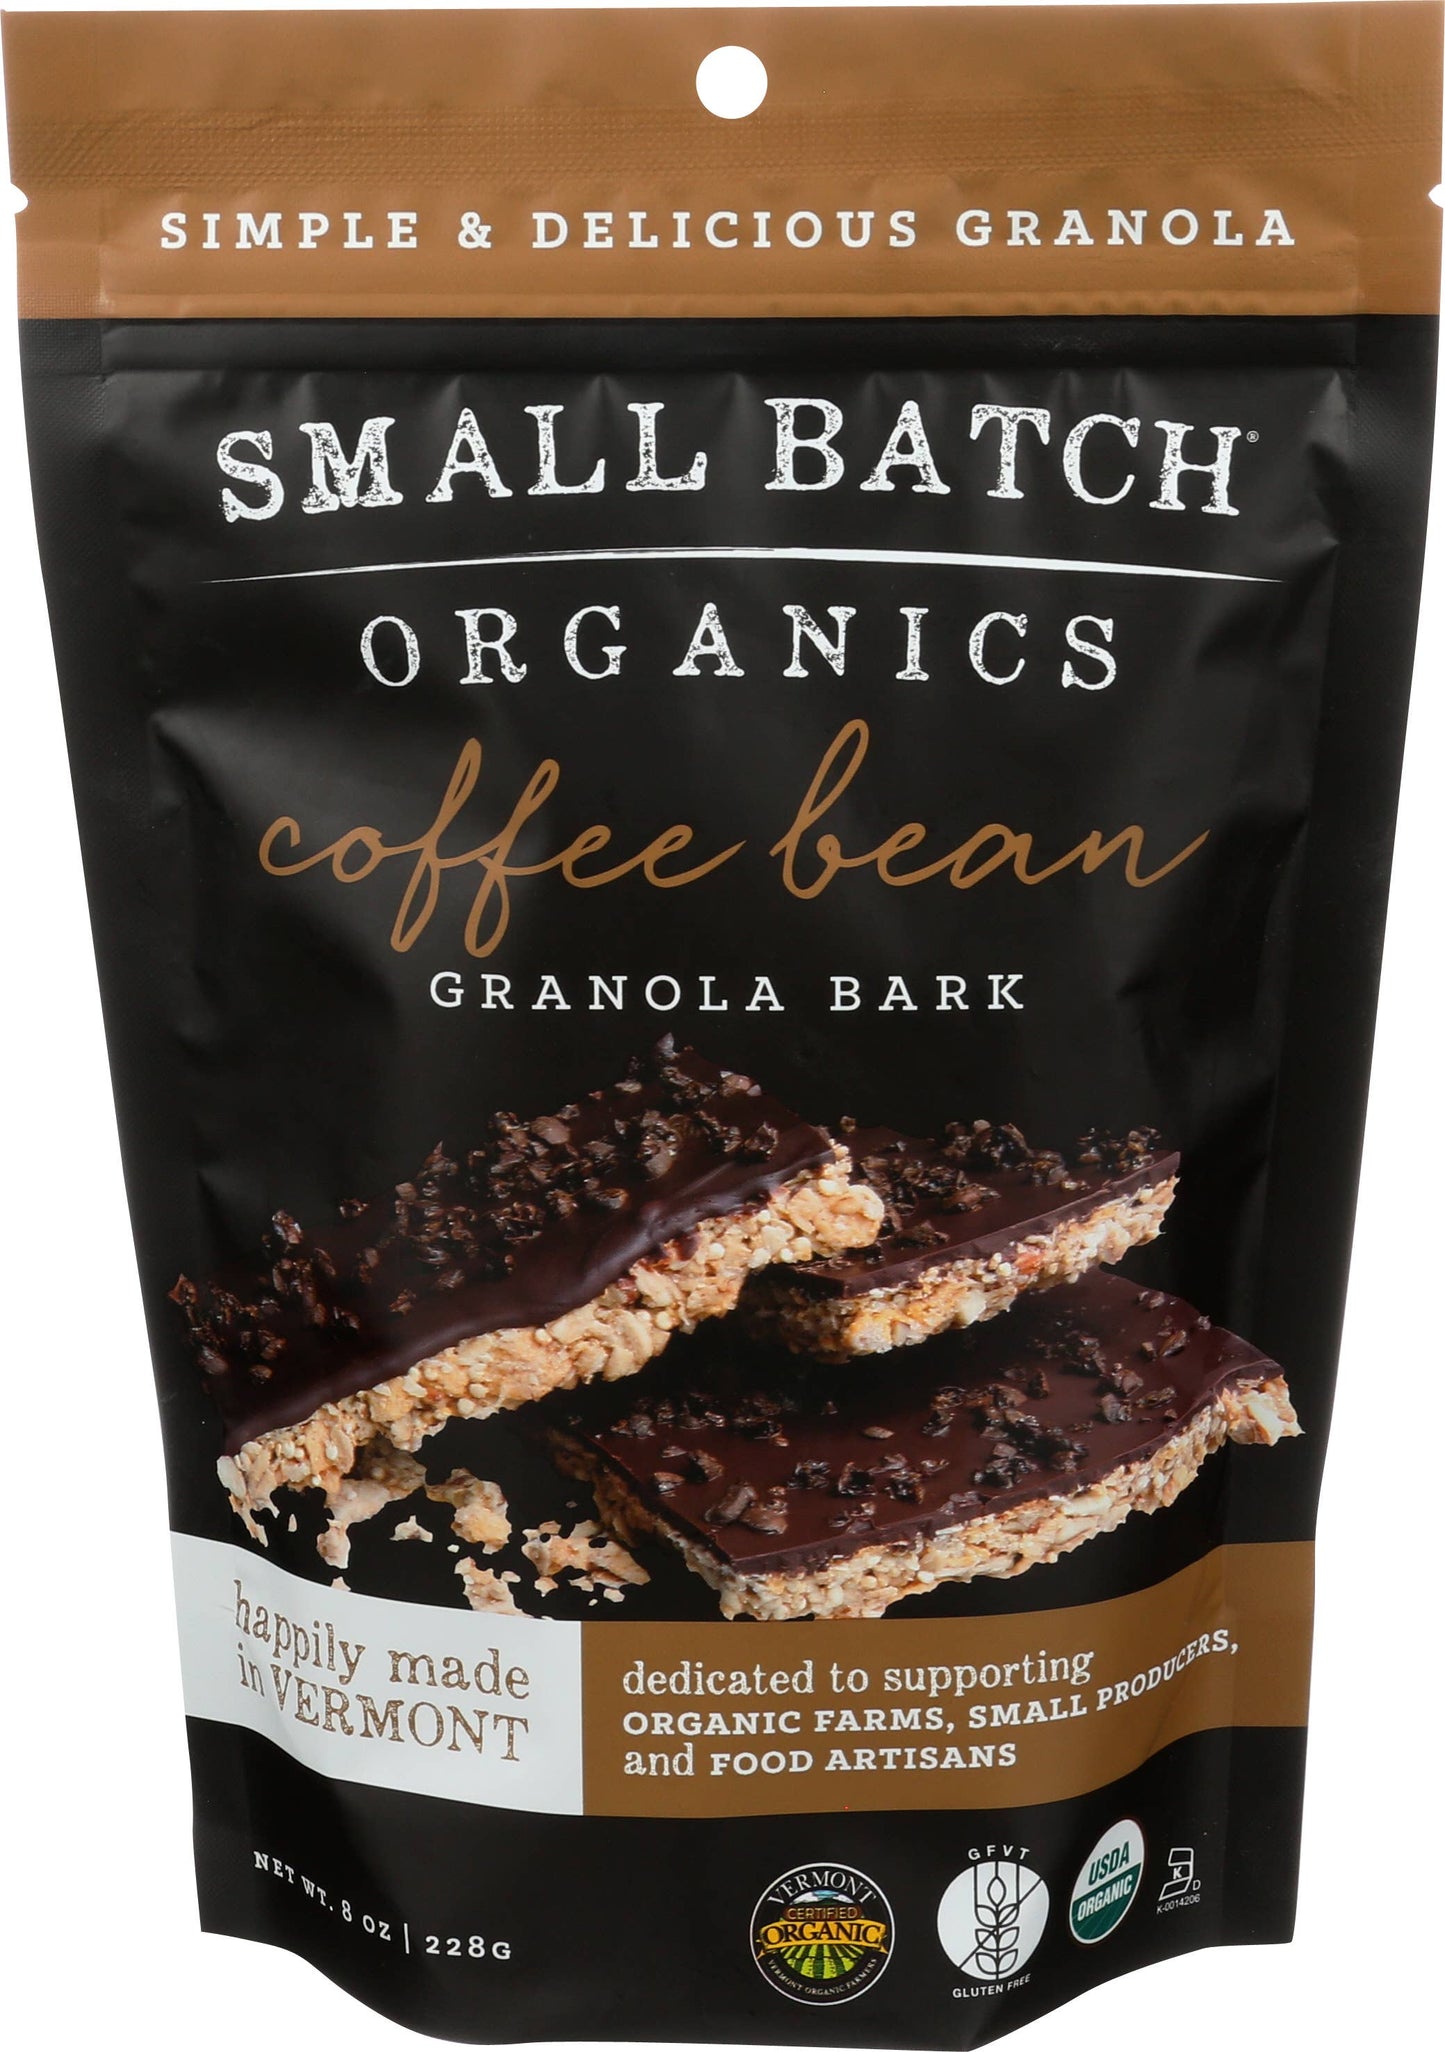 Coffee Bean Granola Bark